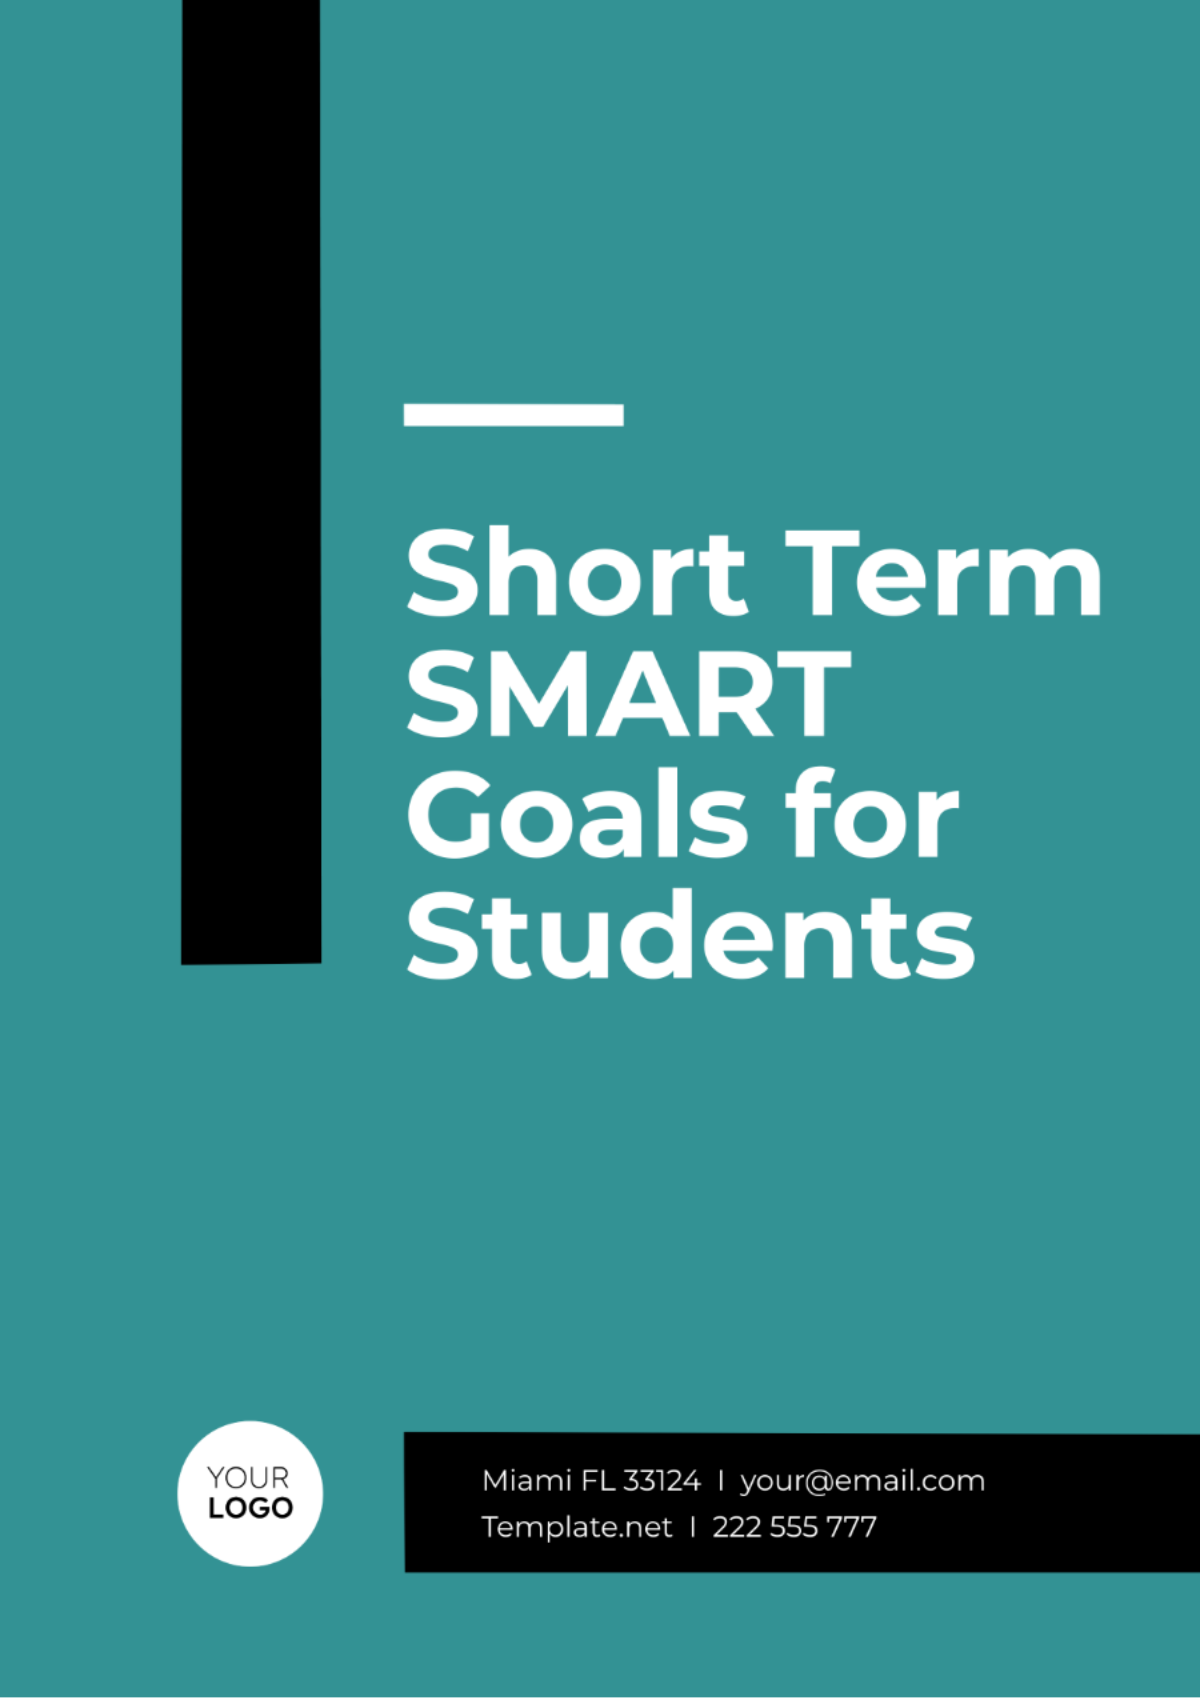 Short Term SMART Goals for Students Template